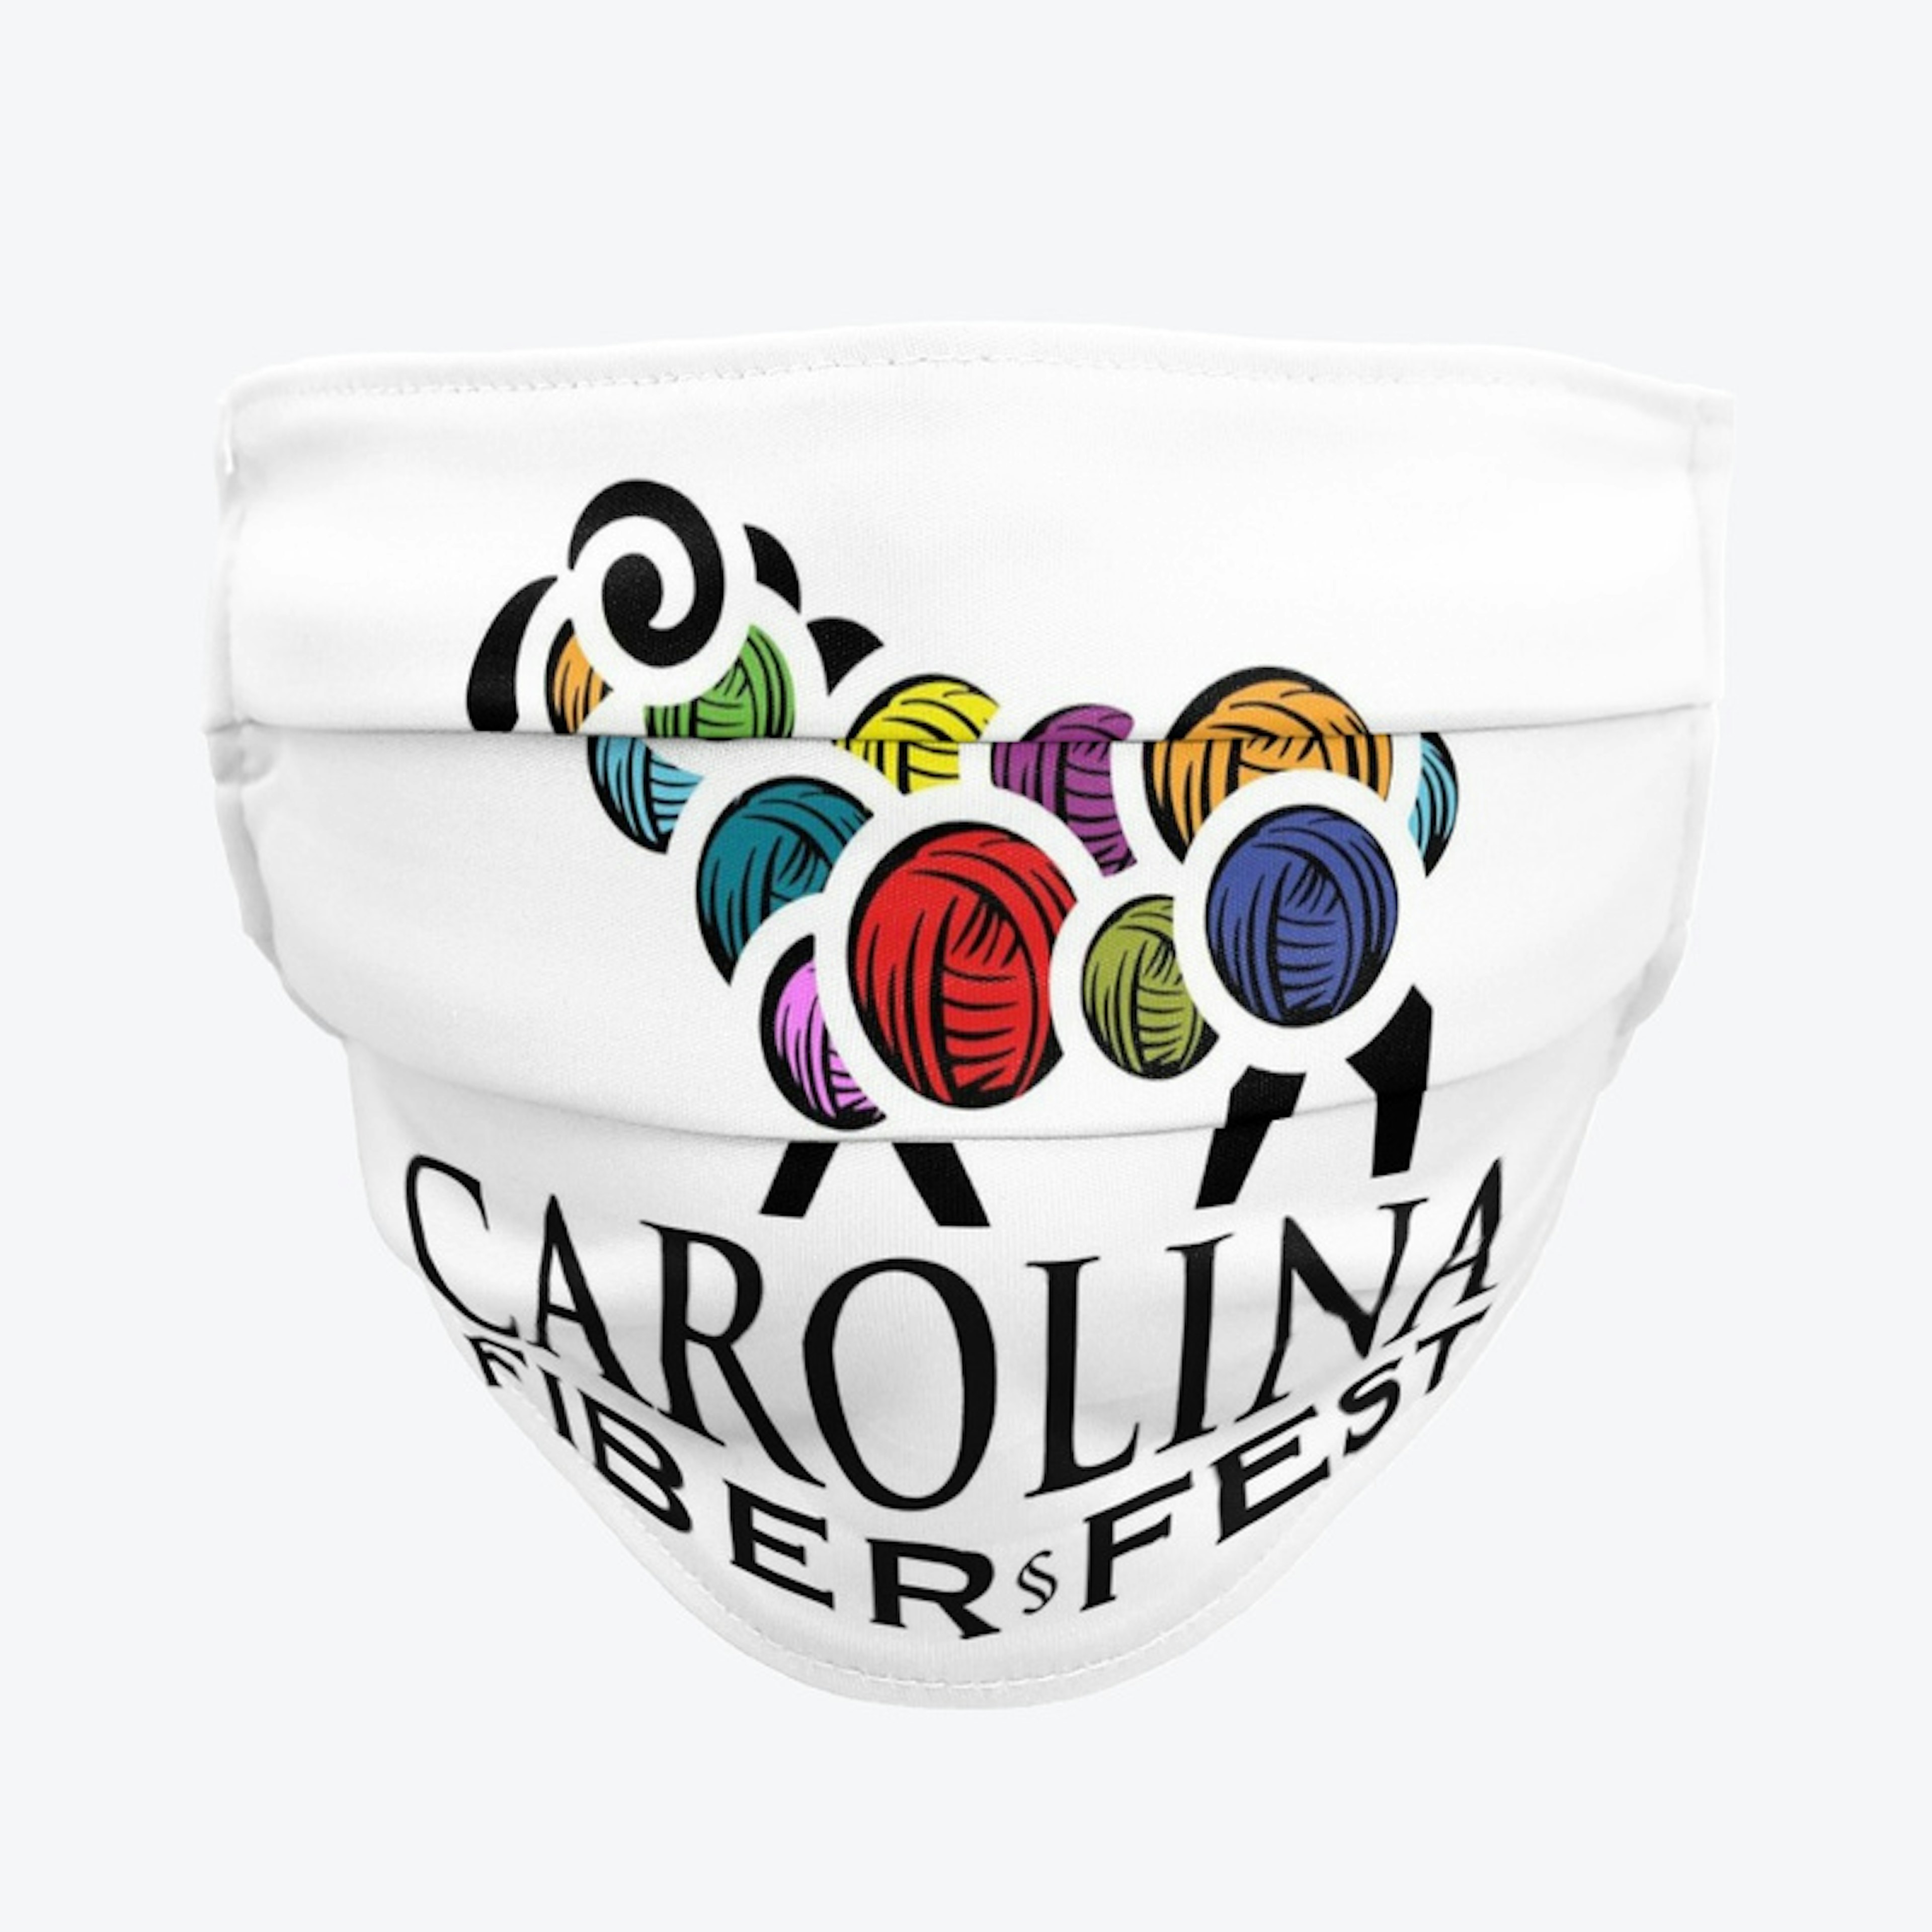 Carolina FiberFest Merchandise